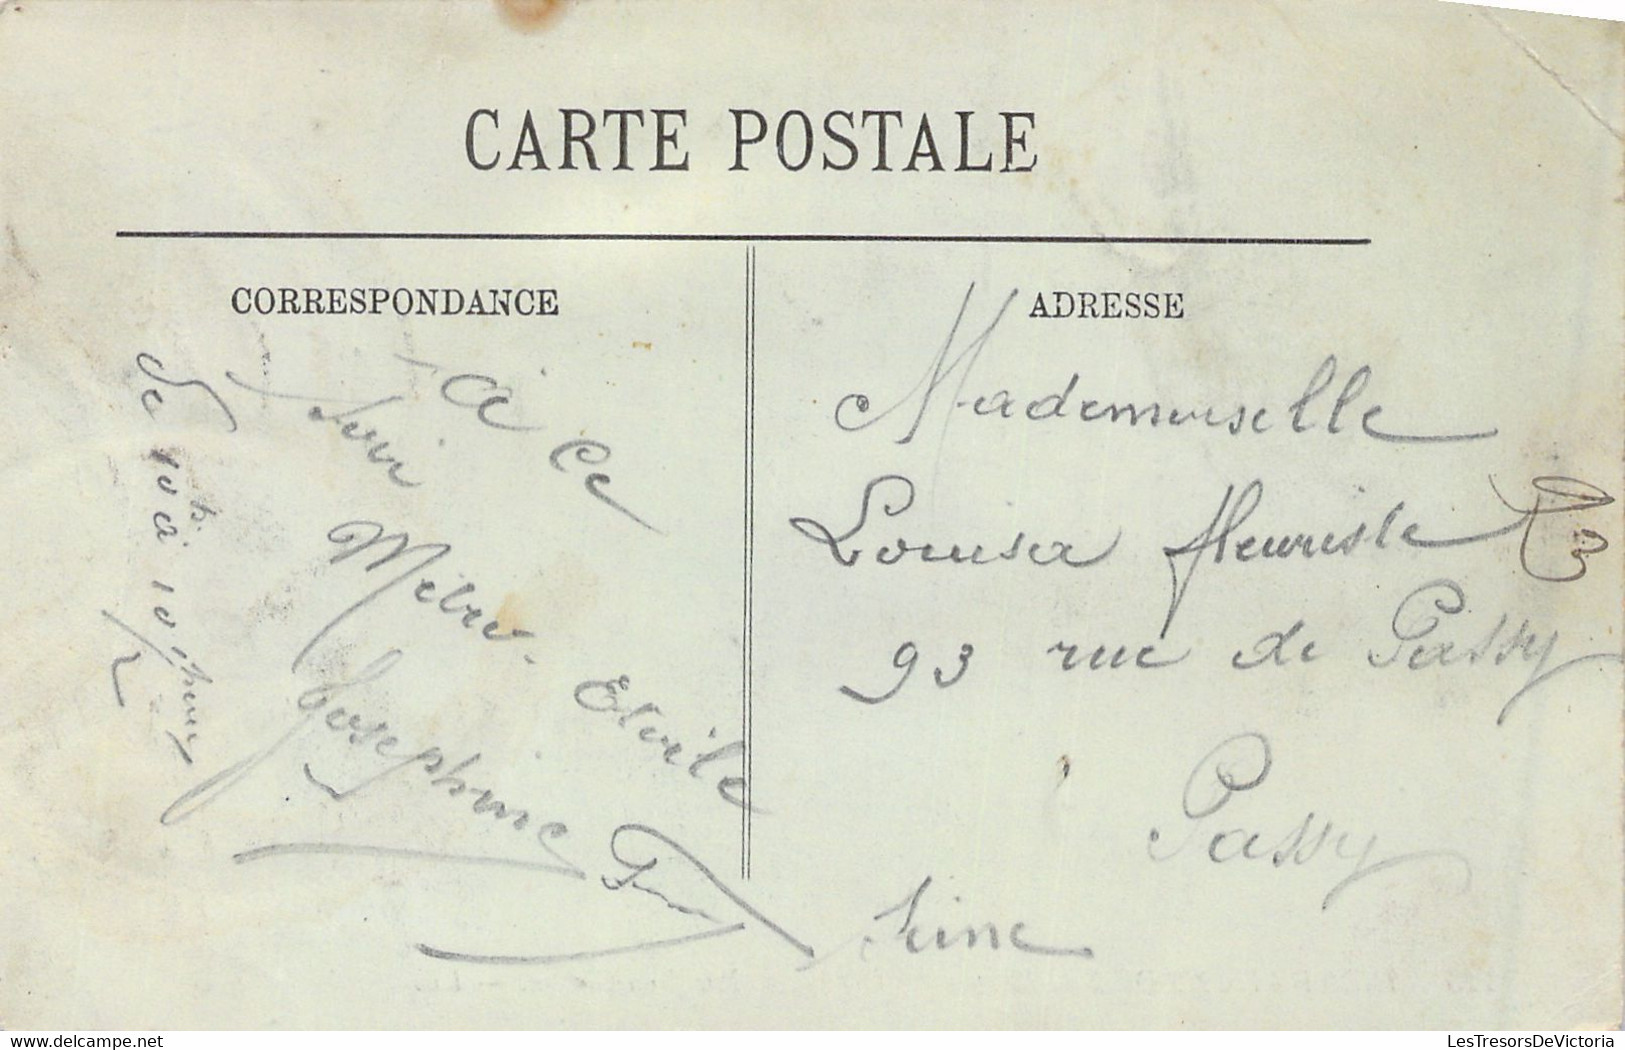 FRANCE - INONDATION DE PARIS - Rue Jean Goujon - Carte Postale Ancienne - Überschwemmung 1910